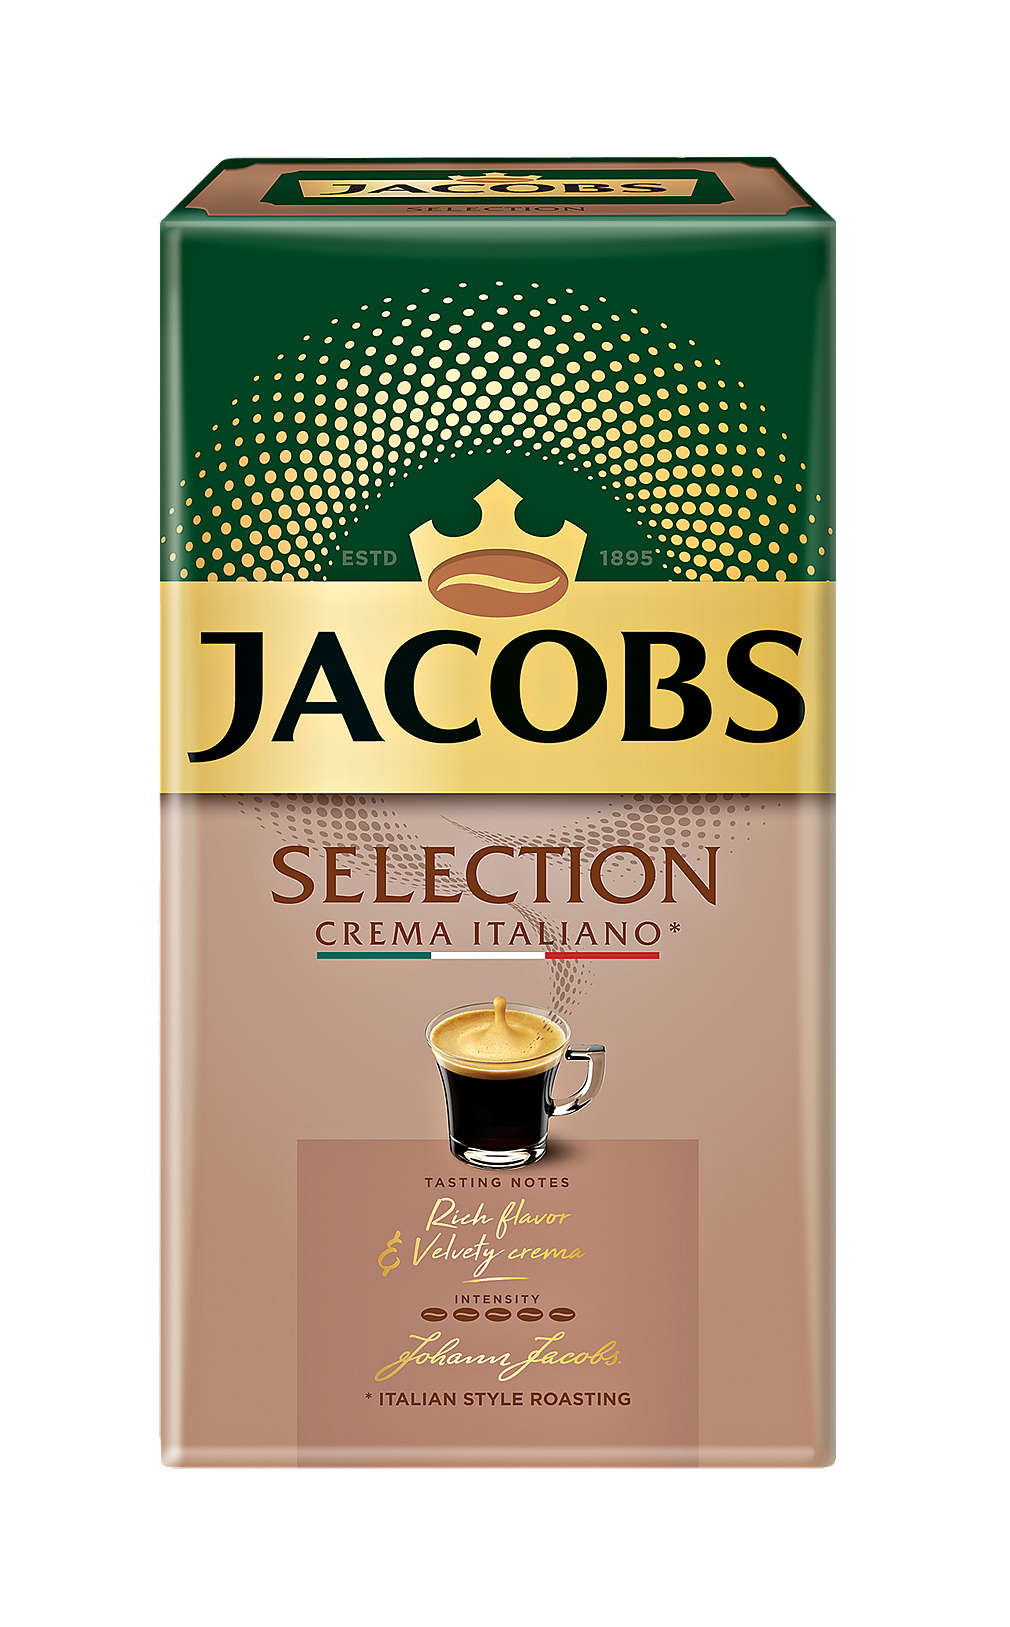 Изображение за продукта Jacobs Selection Мляно кафе Crema Italiano